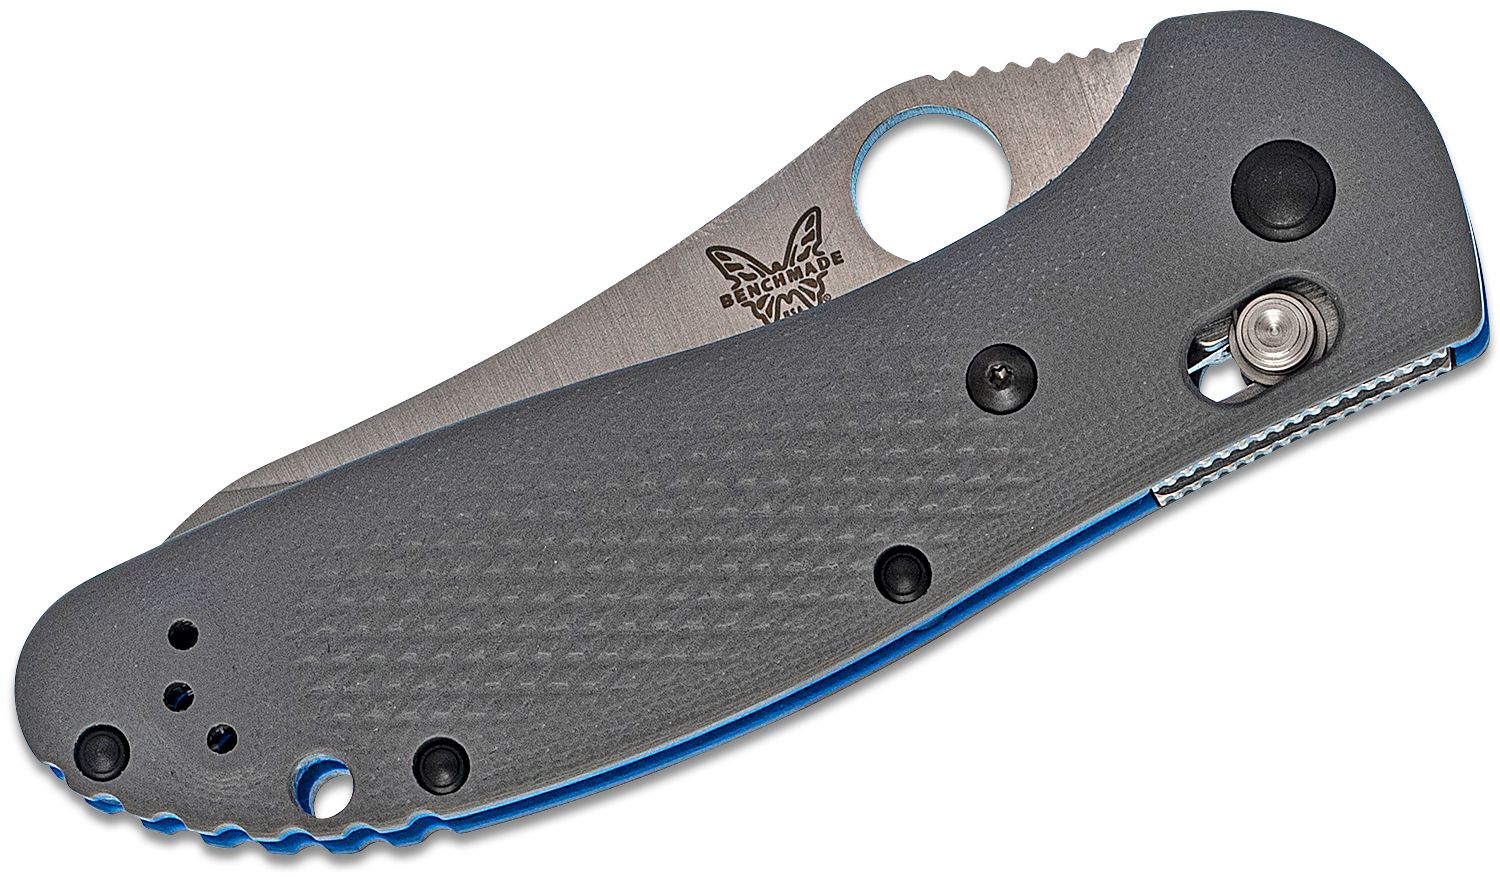 Benchmade Griptilian Axis Lock Folding Knife 3 45 Cpm cv Satin Sheepsfoot Plain Blade Gray G10 Handles Knifecenter 550 1 Discontinued